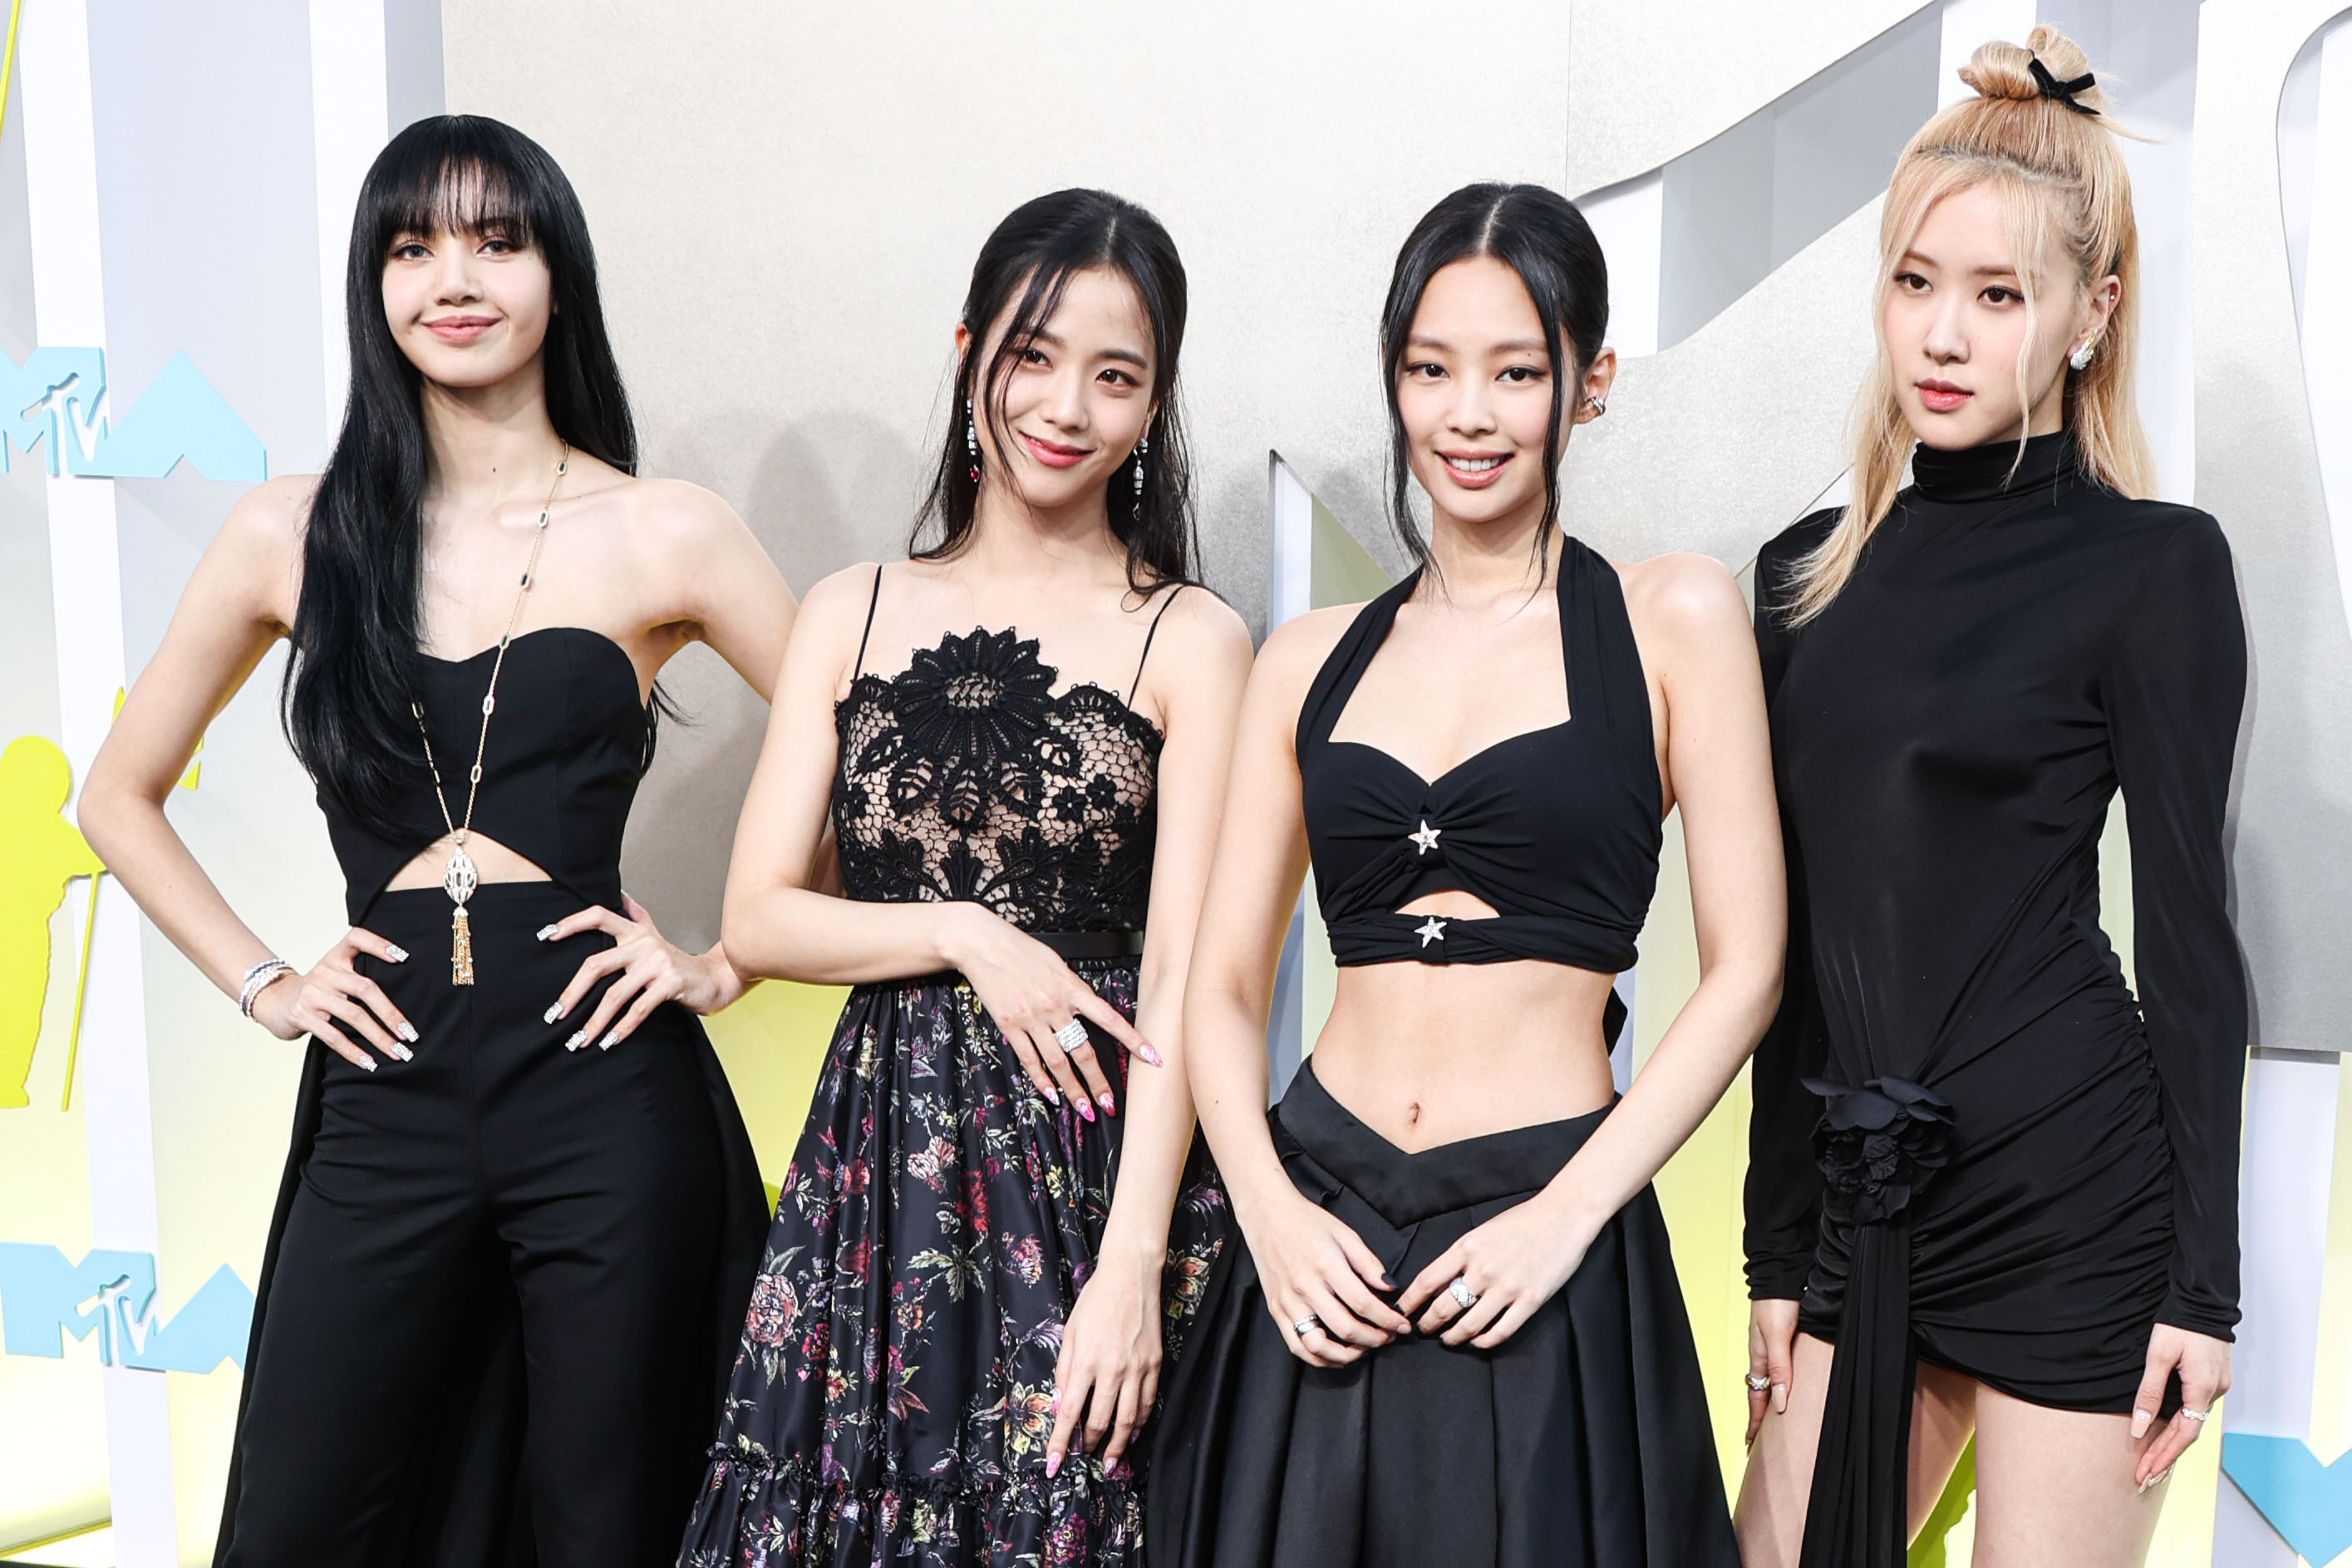 Vogue Korea Website Shares More HQ Pics of BLACKPINK Photoshoot